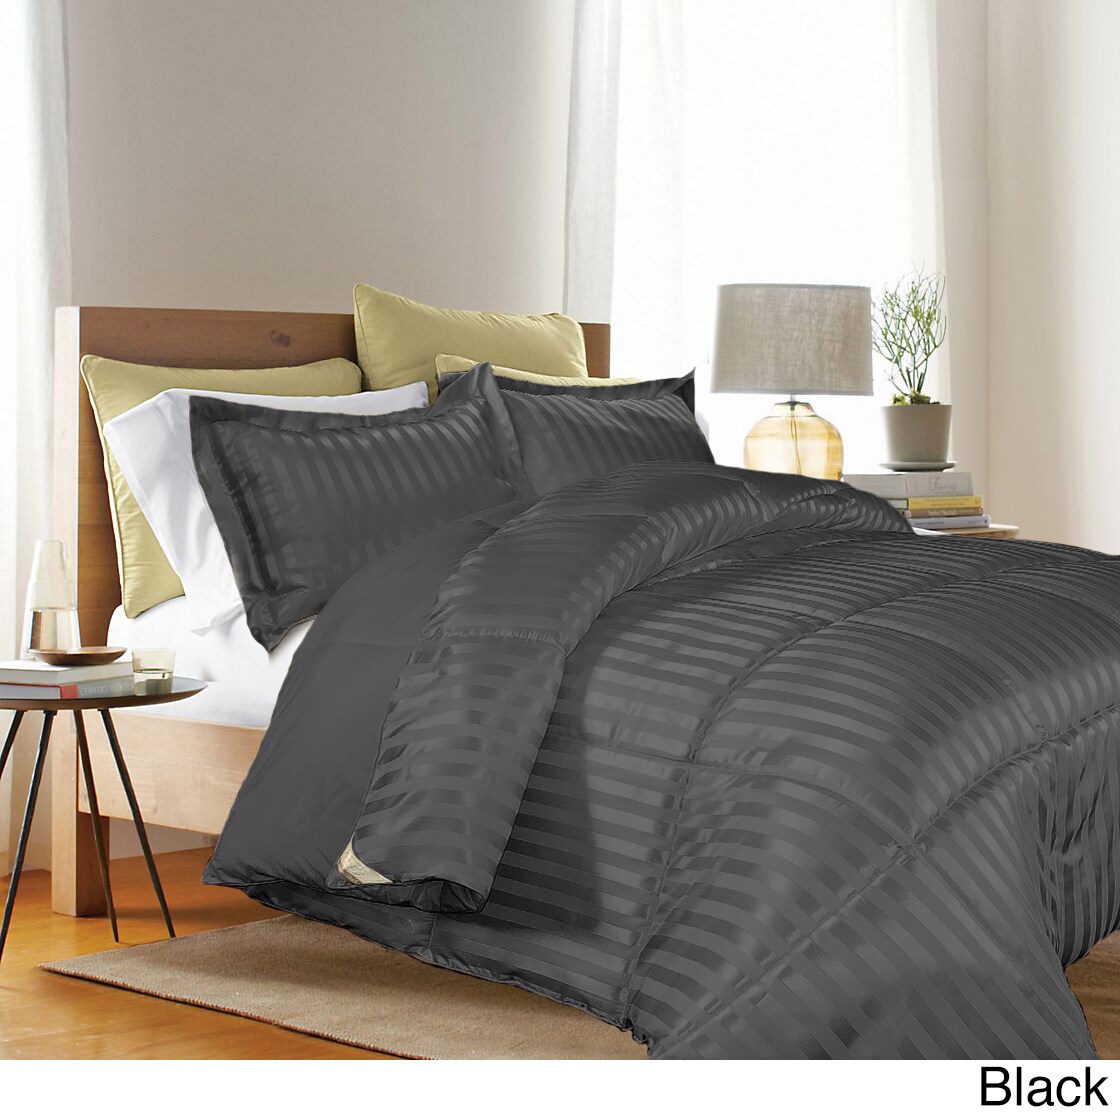 Gray Color 3-Piece Reversible Down Alternative Comforter Set and Shams Black